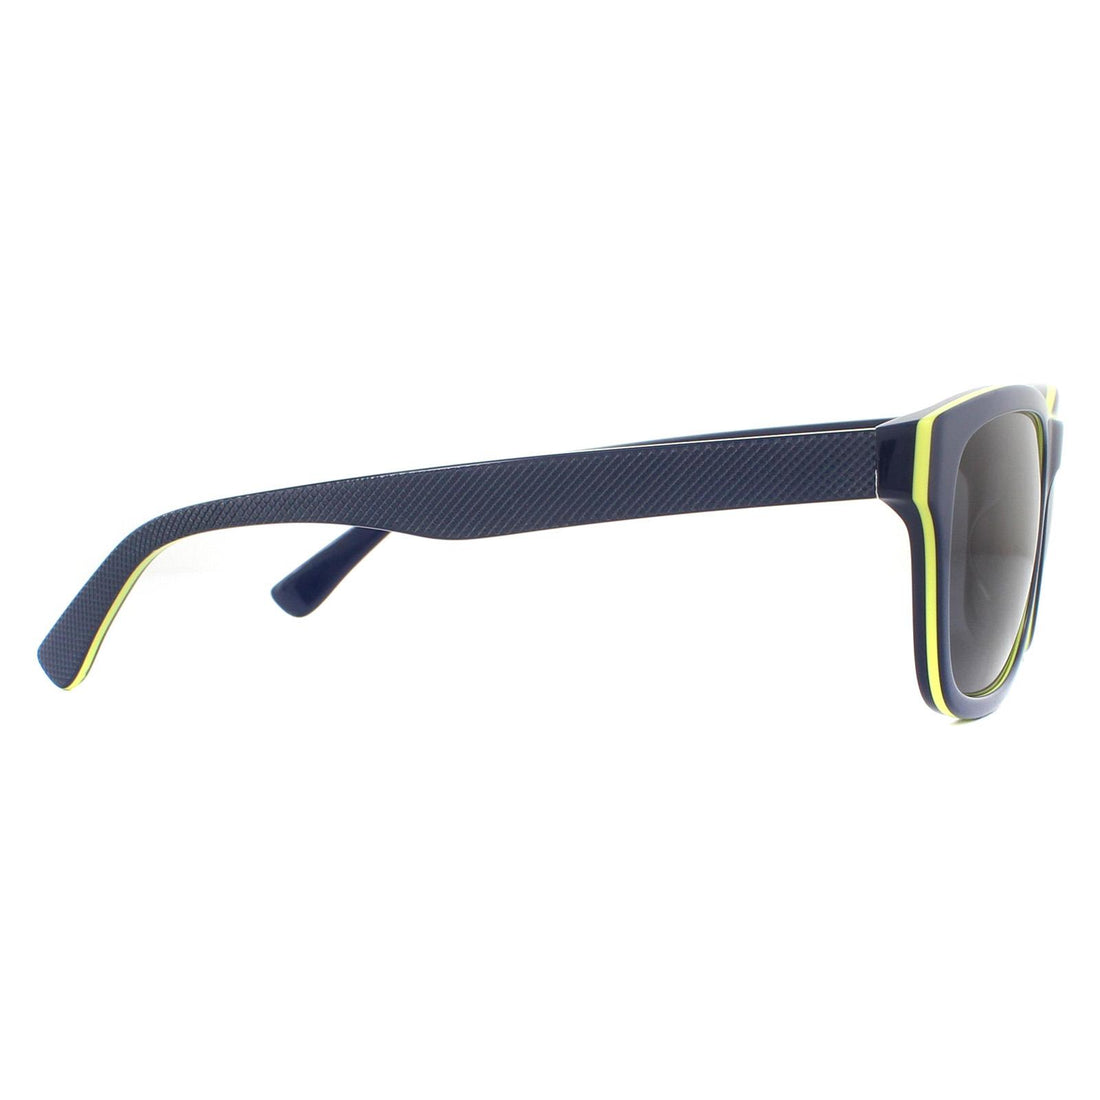 Lacoste Sunglasses L683S 414 Blue Grey